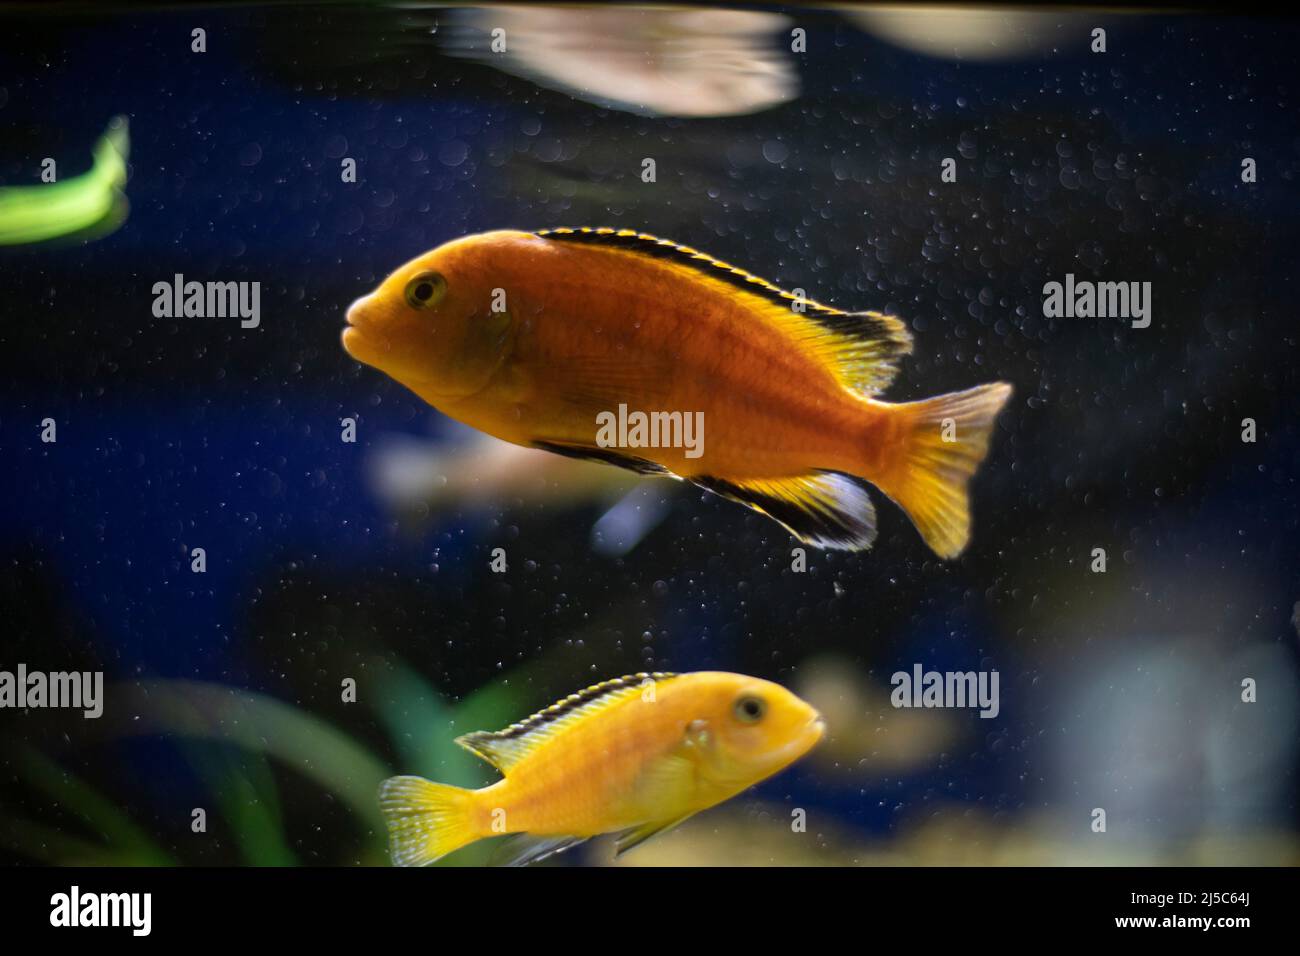 Fish in aquarium. Marine fish swim in water. Peaceful world. Aquatic fauna. Stock Photo